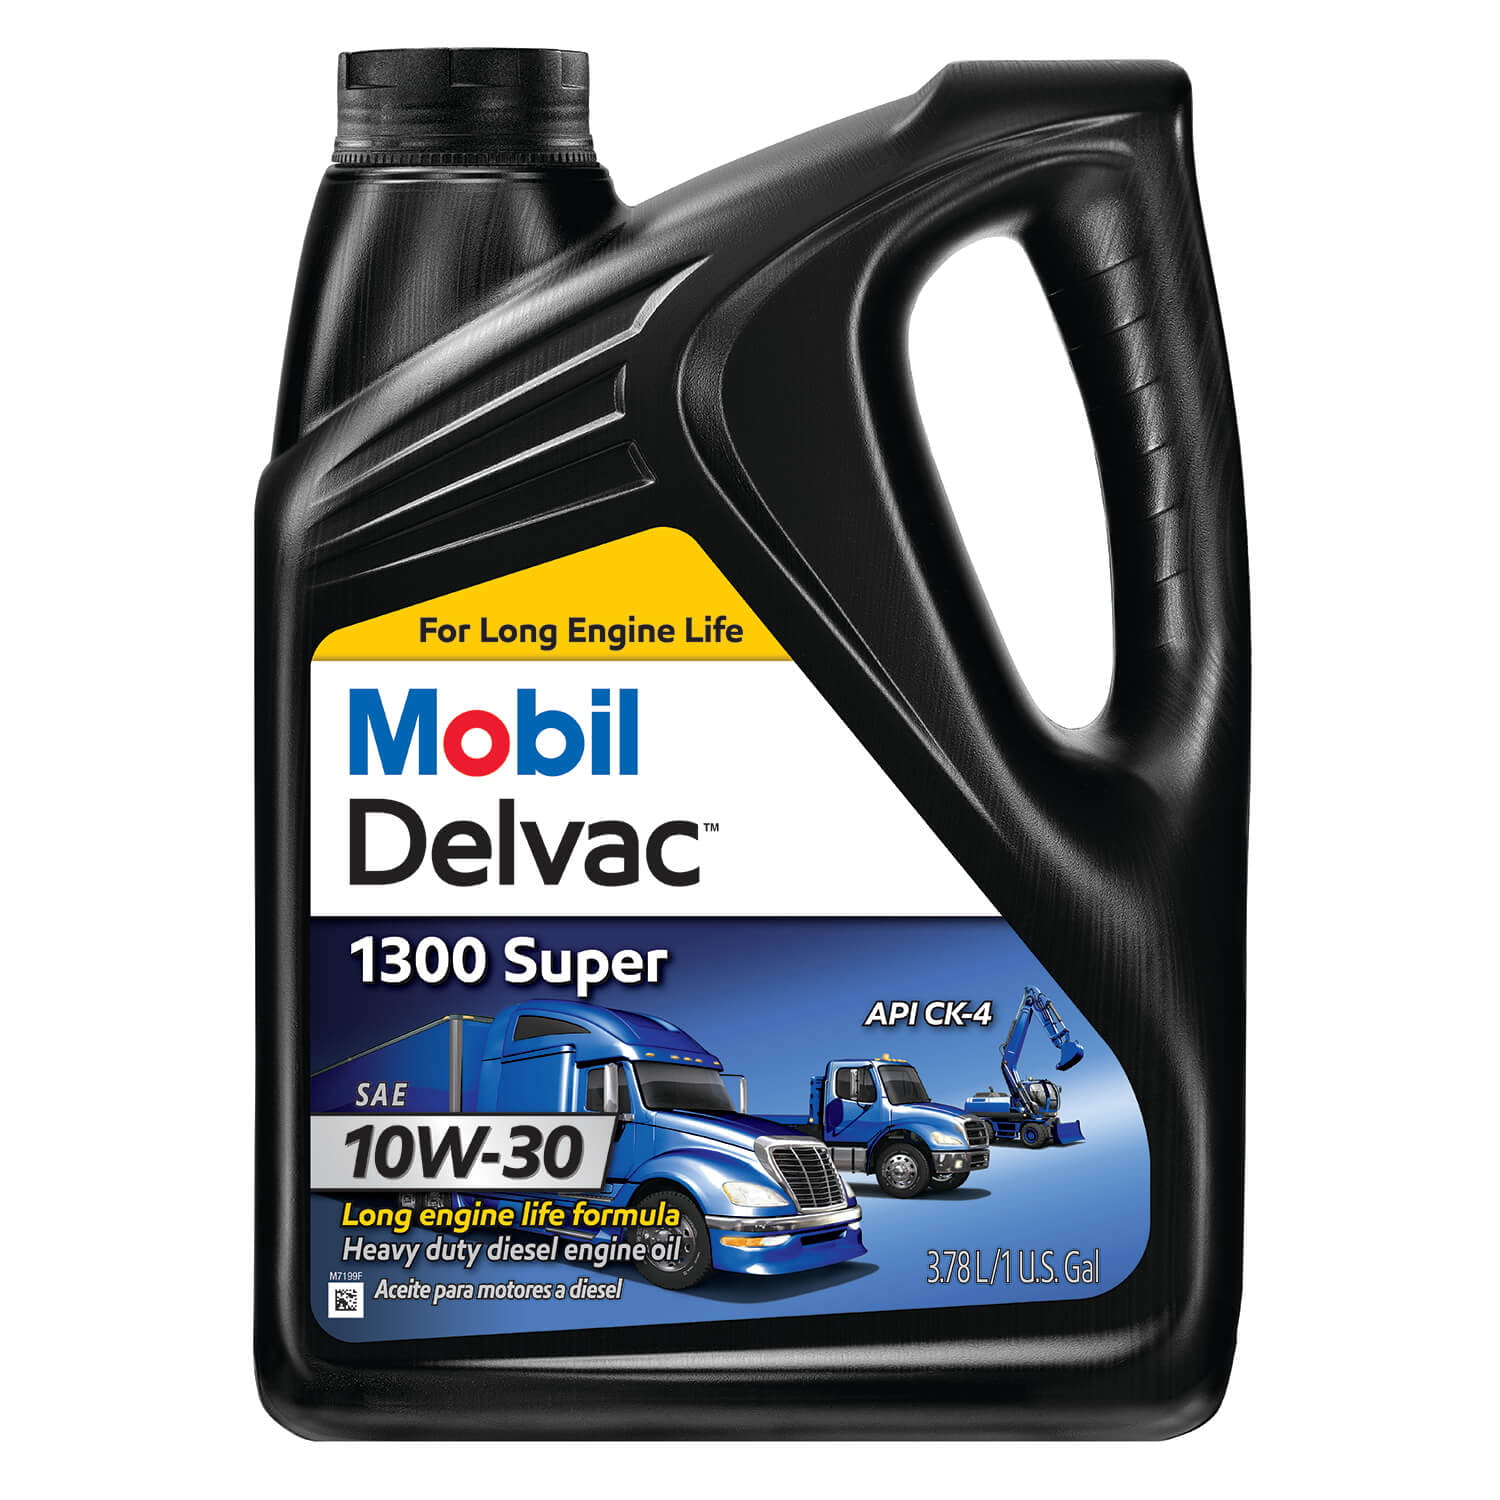 1-Gallon Mobil Delvac 1300 Super Heavy Duty Premium Synthetic Blend Diesel Engine Oil (10W-30) $21.47  + Free S&H w/ Walmart+ or $35+ $12.47